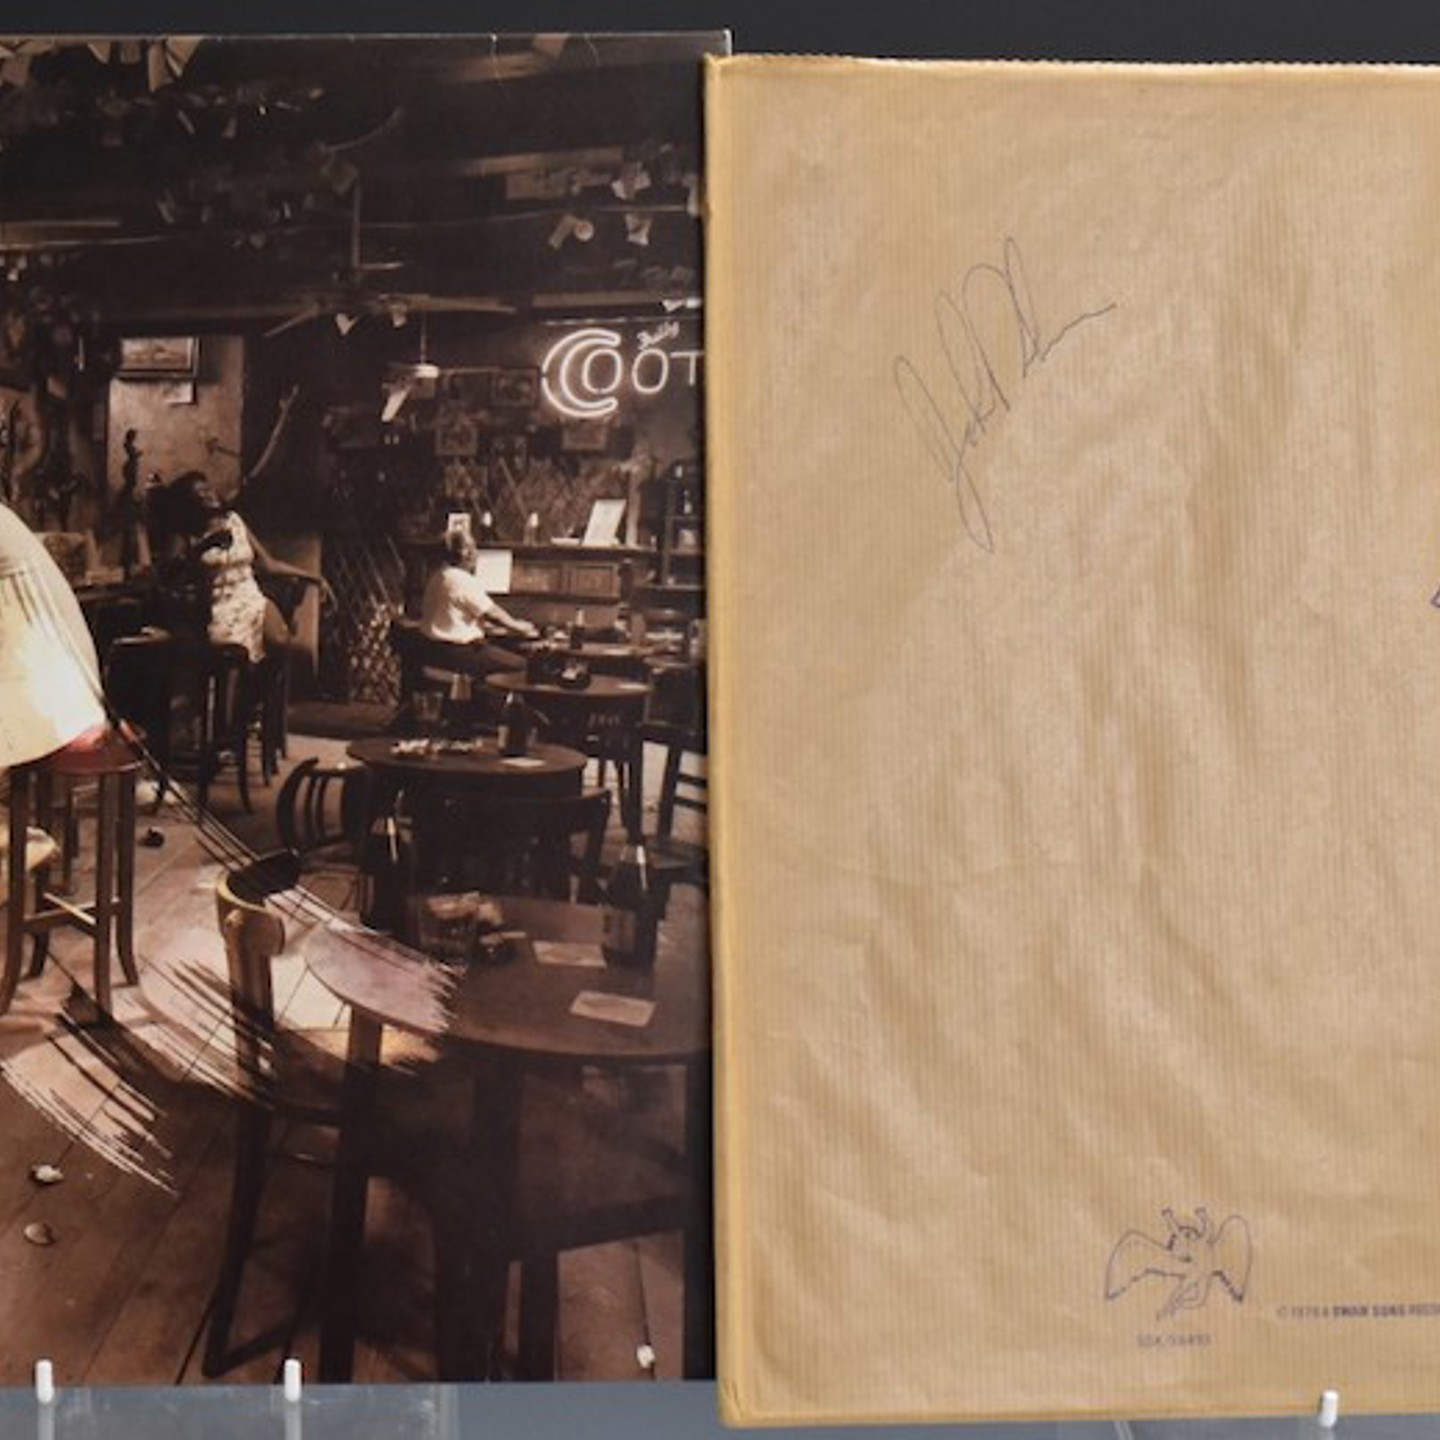 Led Zeppelin John Bonham In Through The Out Door (SSK 59410) Hand Signed By John Bonham On Outer Bag And Promo Poster Hammer £3000